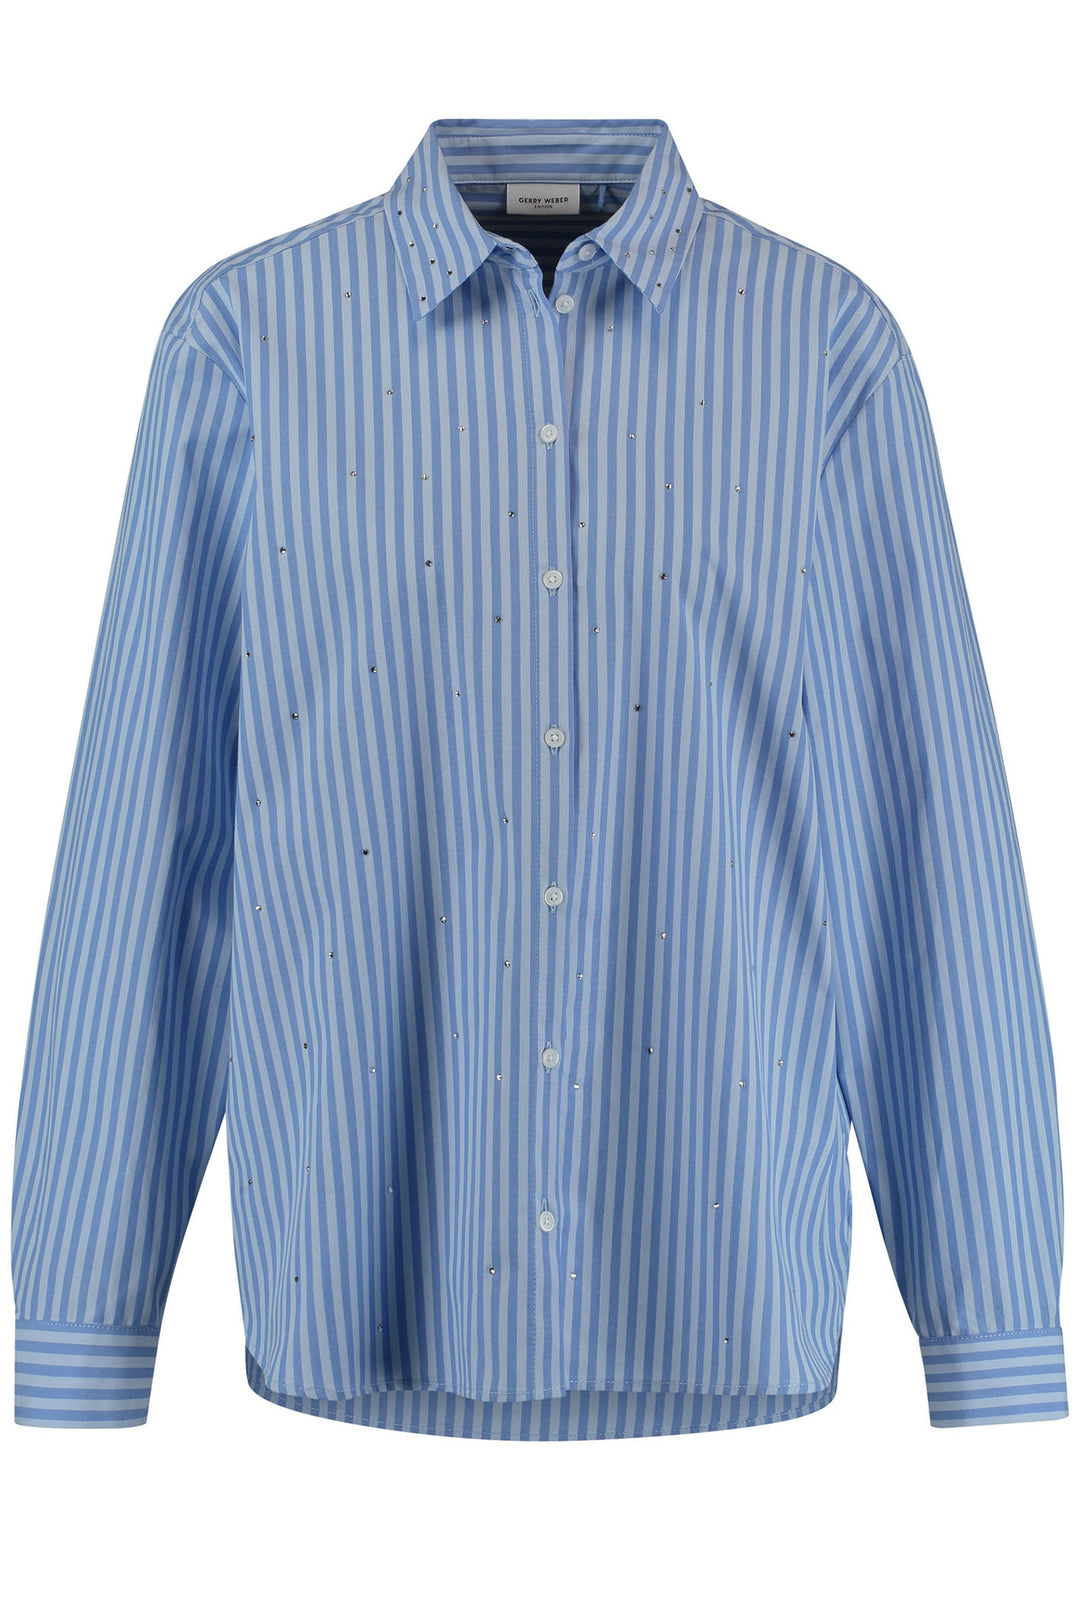 Gerry Weber 260026-66418 Blue Stripe Diamante Detail Shirt - Dotique Chesterfield